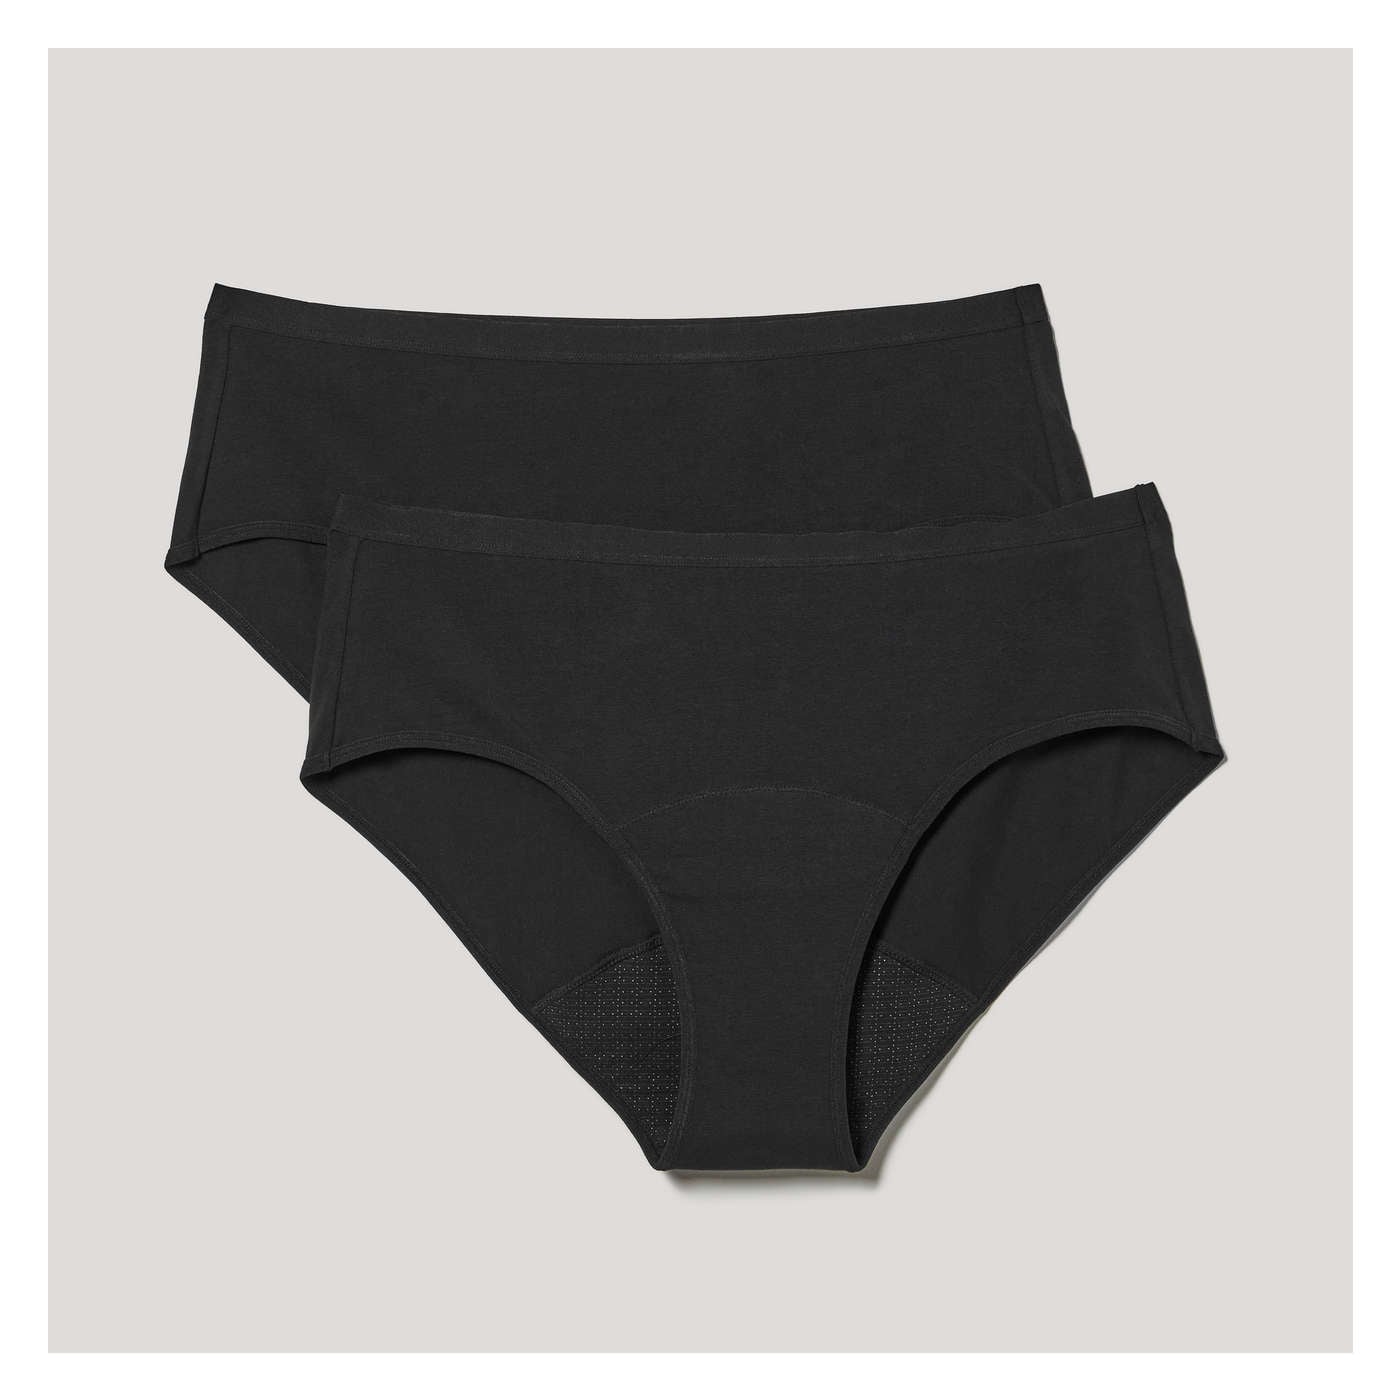 Unders by Proof Period Underwear Briefs - Light Absorbency - Black - -  ShopStyle